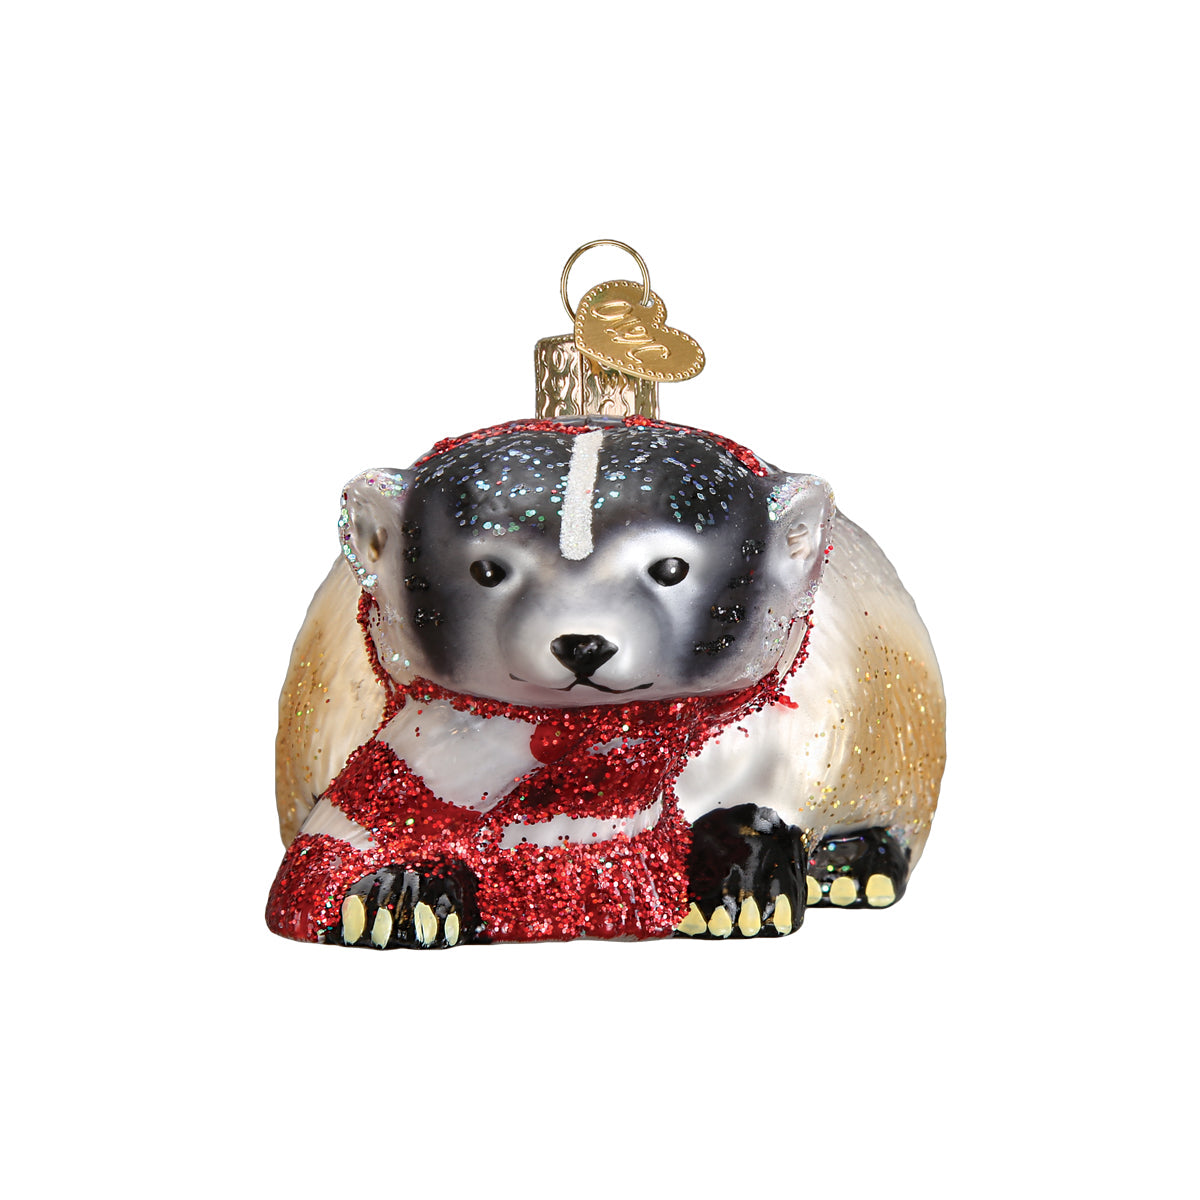 Old World Christmas Badger Ornament    